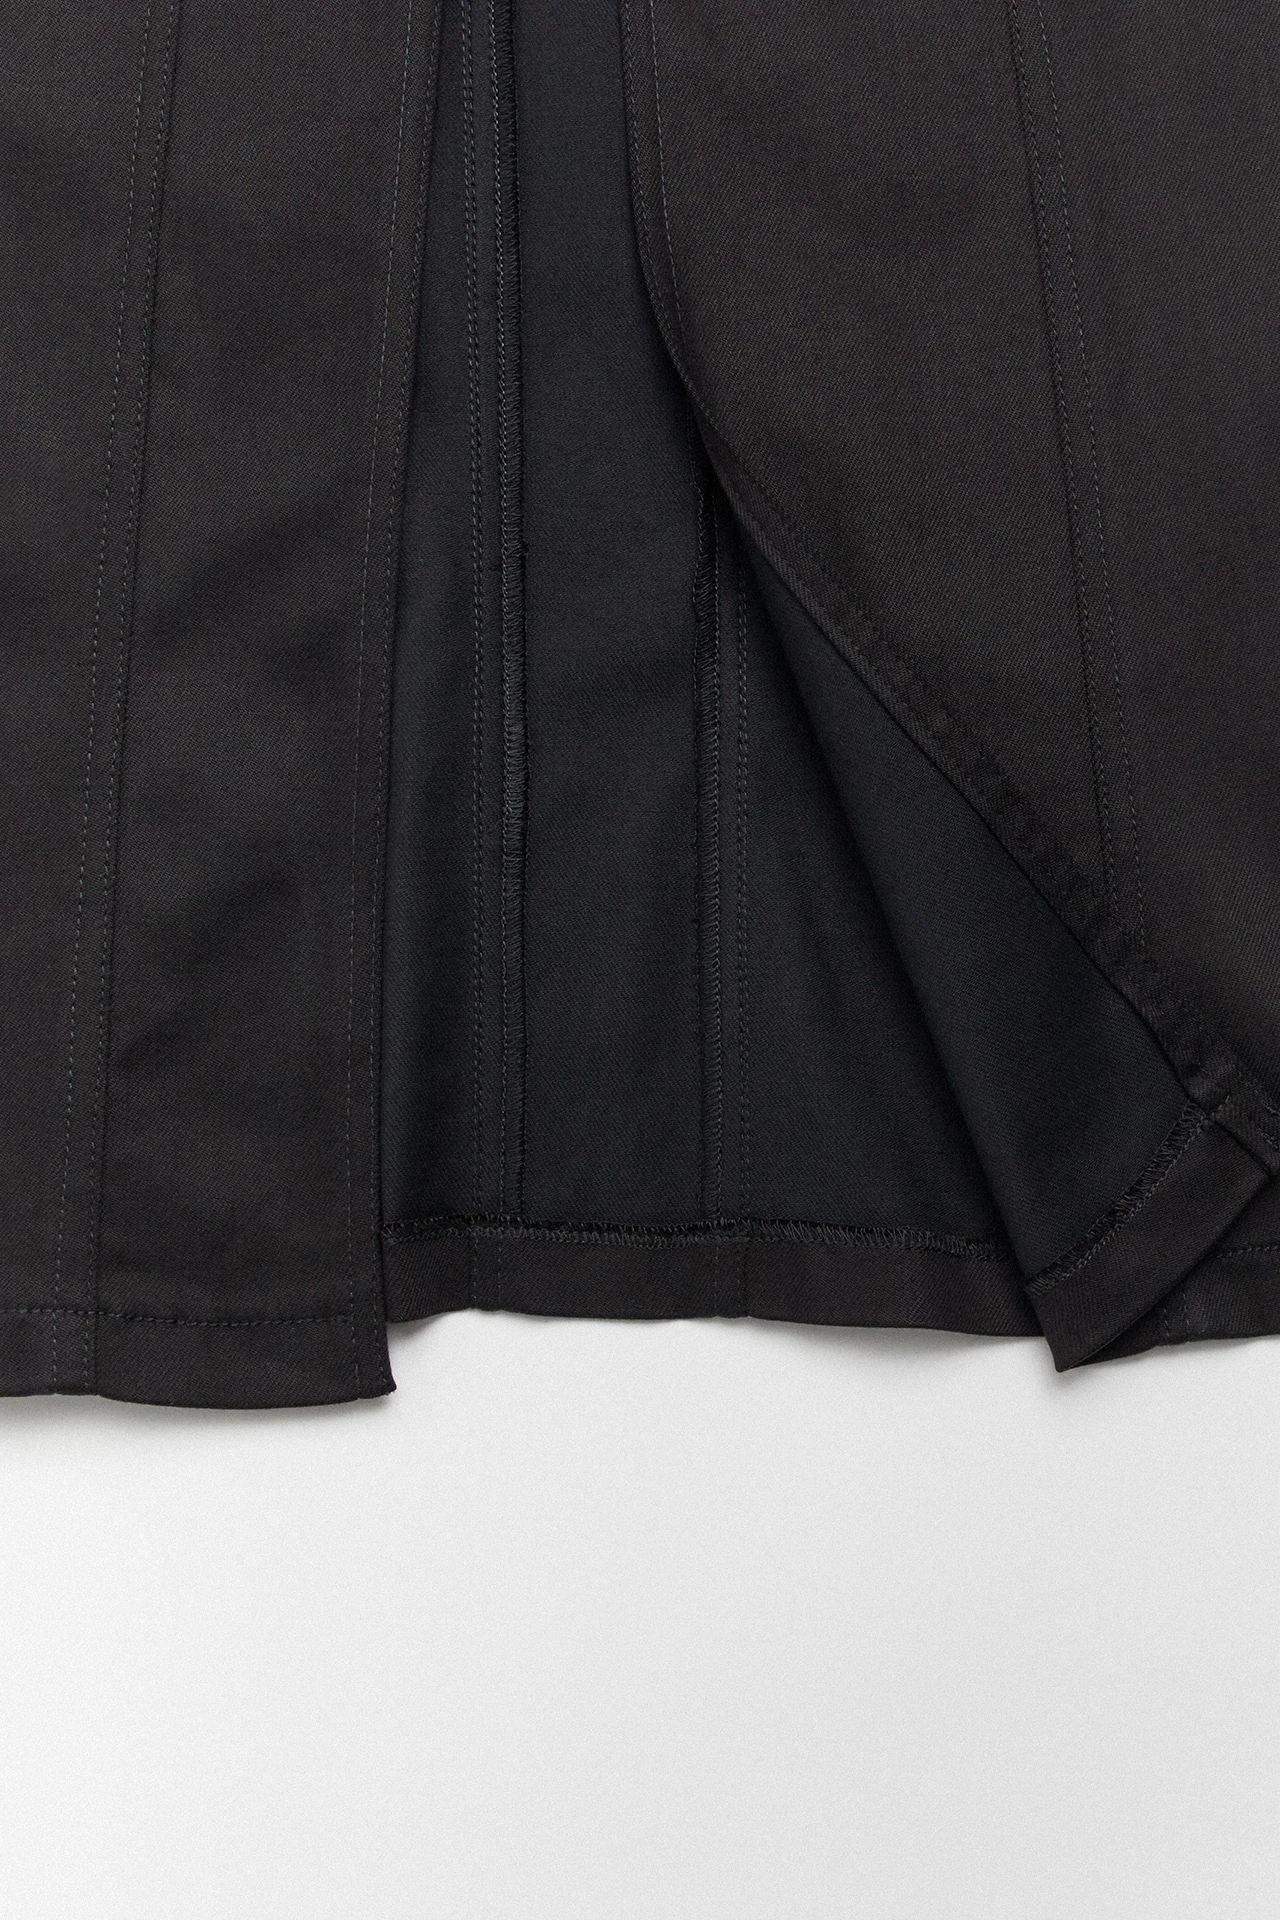 Miista-luz-black-skirt-03